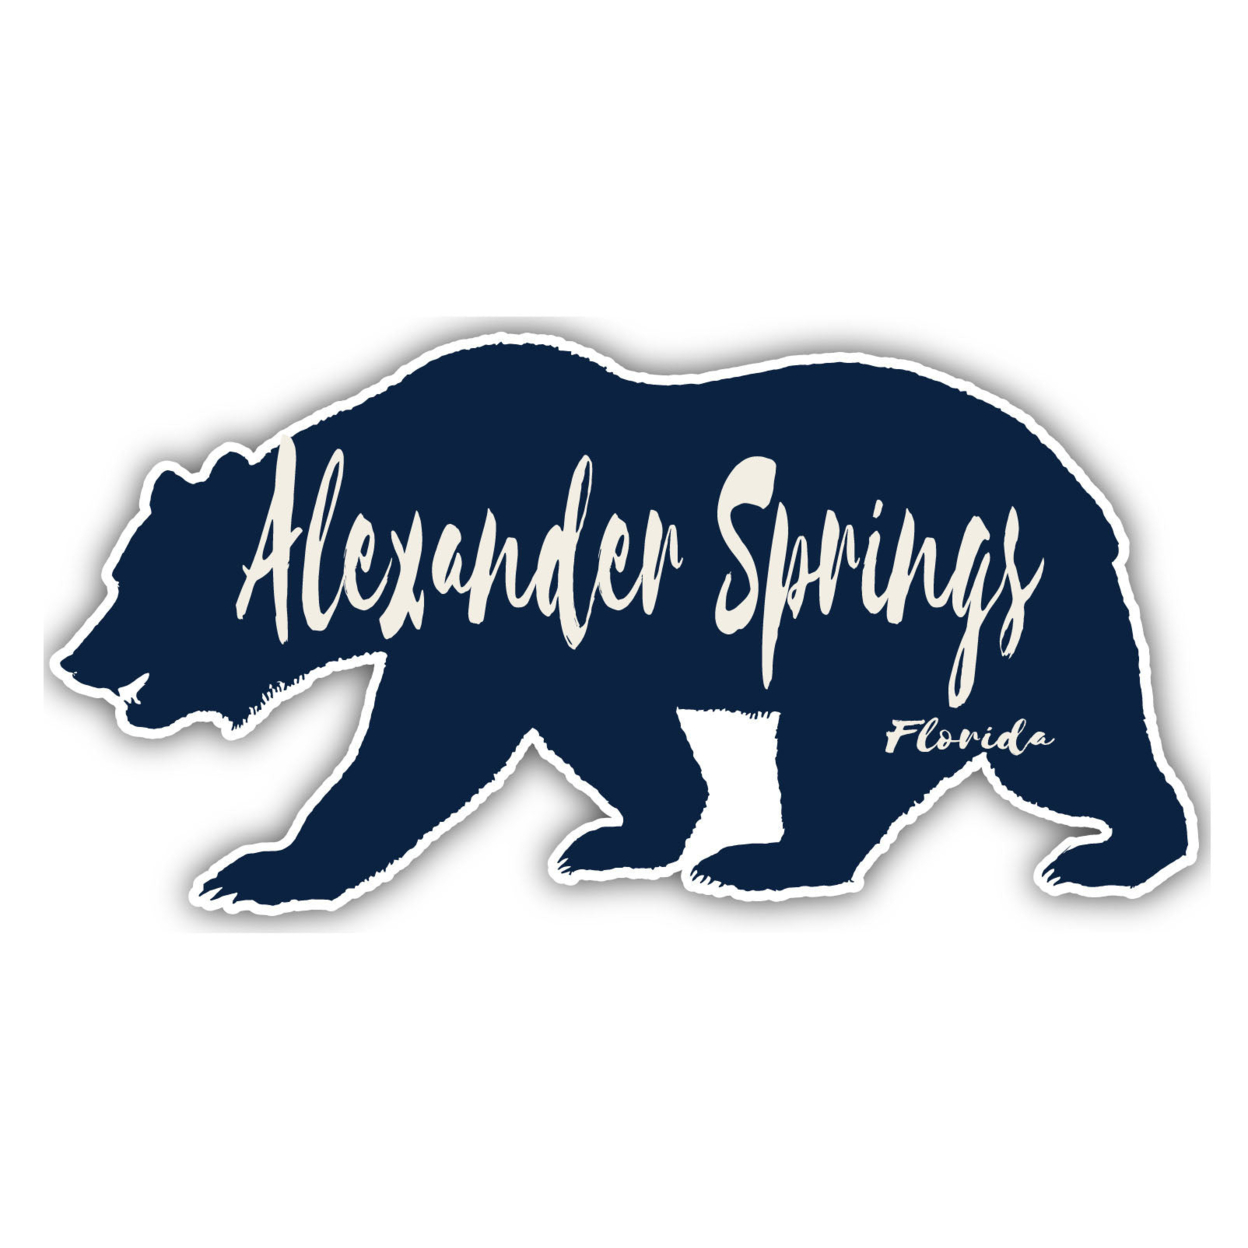 Alexander Springs Florida Souvenir Decorative Stickers (Choose Theme And Size) - Single Unit, 8-Inch, Tent